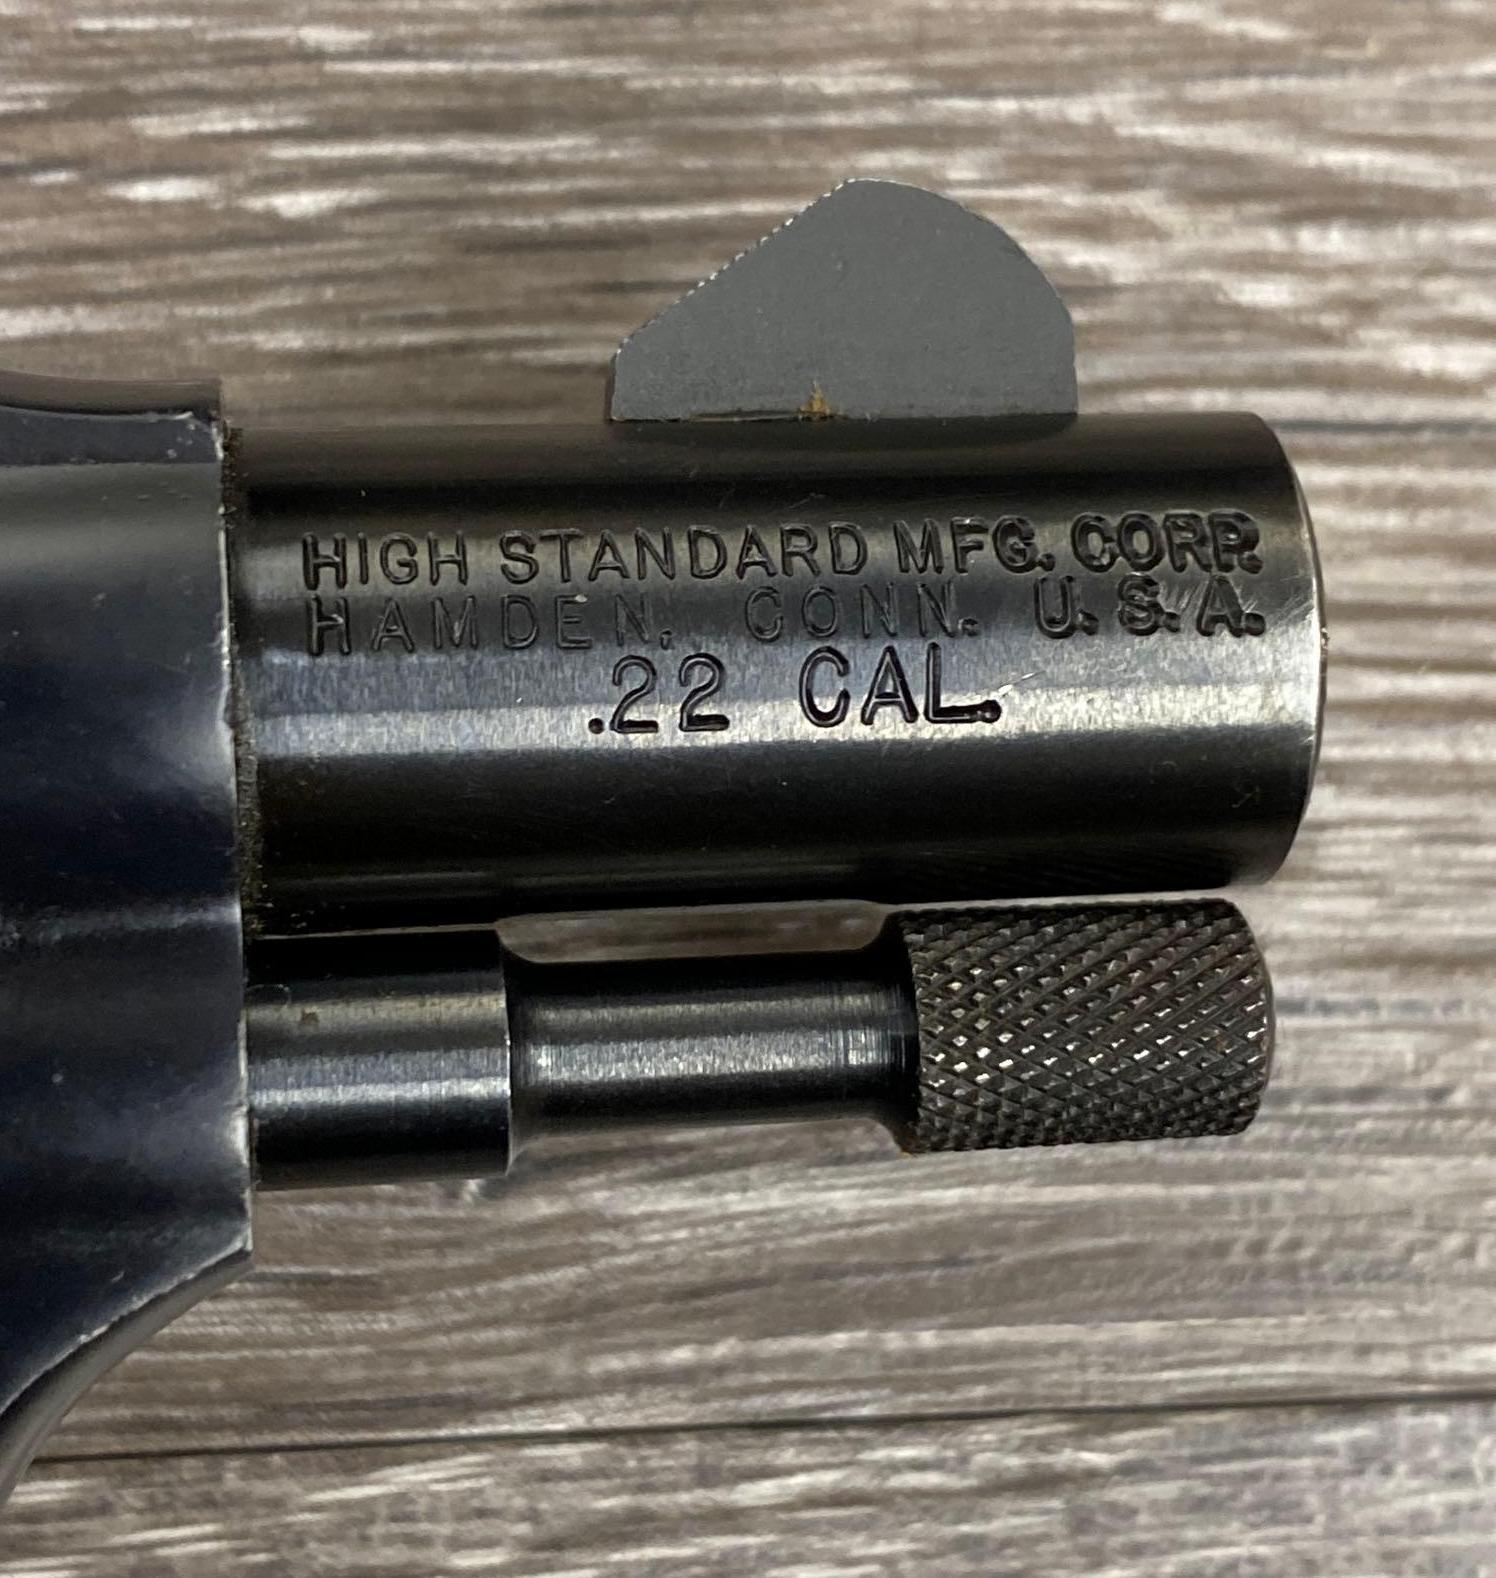 HIGH STANDARD SENTINEL 9-SHOT REVOLVER .22 CAL.